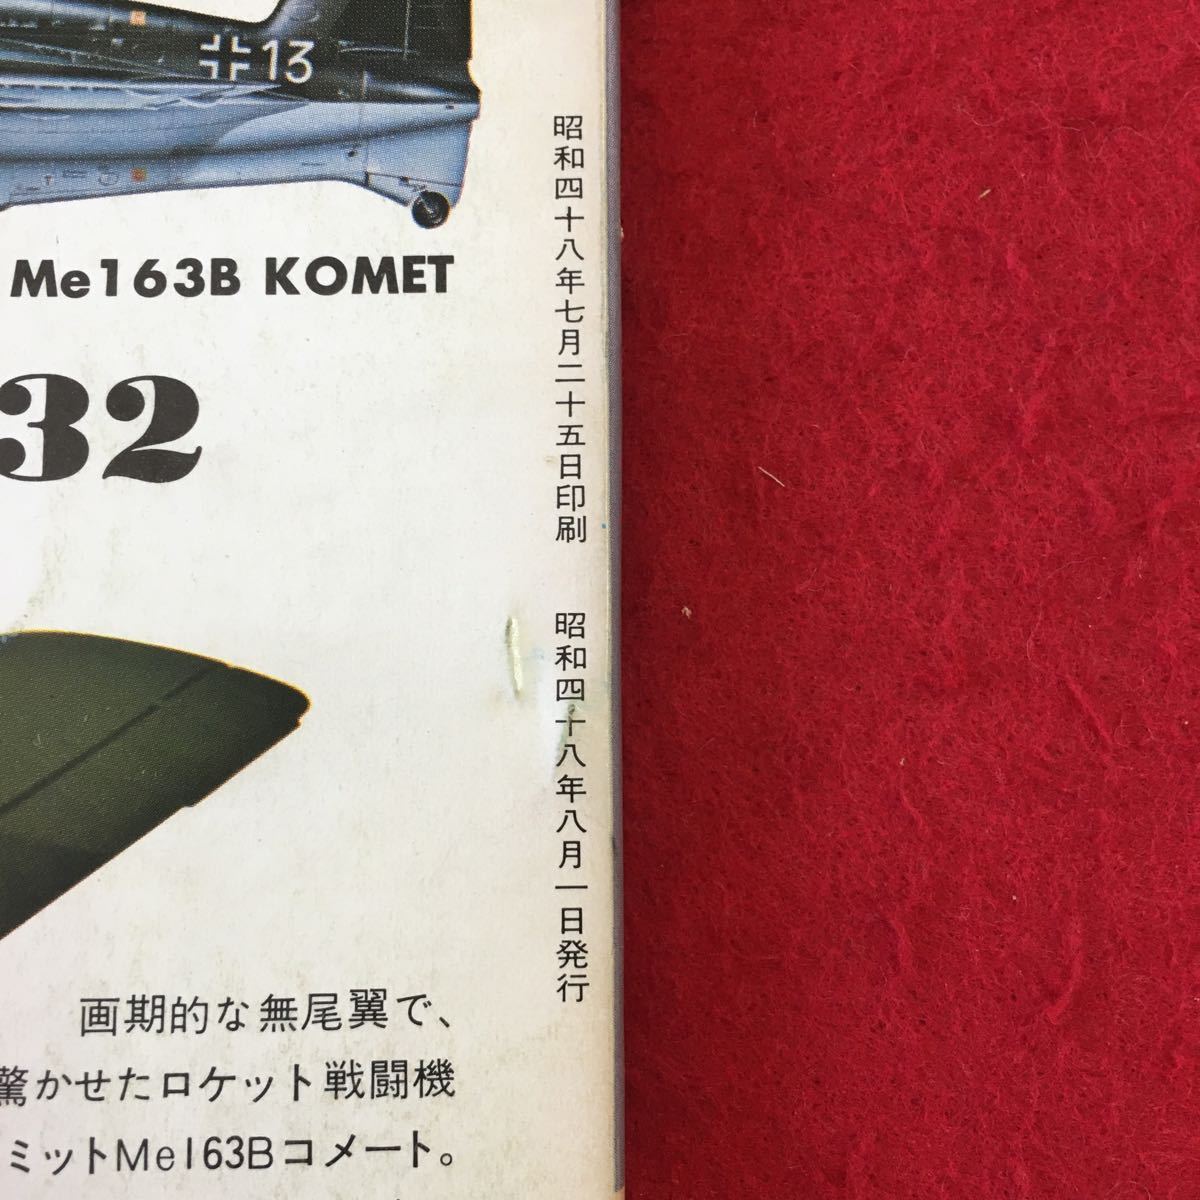 S7i-260 モデルアート 1973年8月号 付録付き 昭和48年8月1日 発行 雑誌 ミリタリー 戦車 飛行機 戦闘機 水上機 陸上機 マチルダ F4F FM-2_画像3